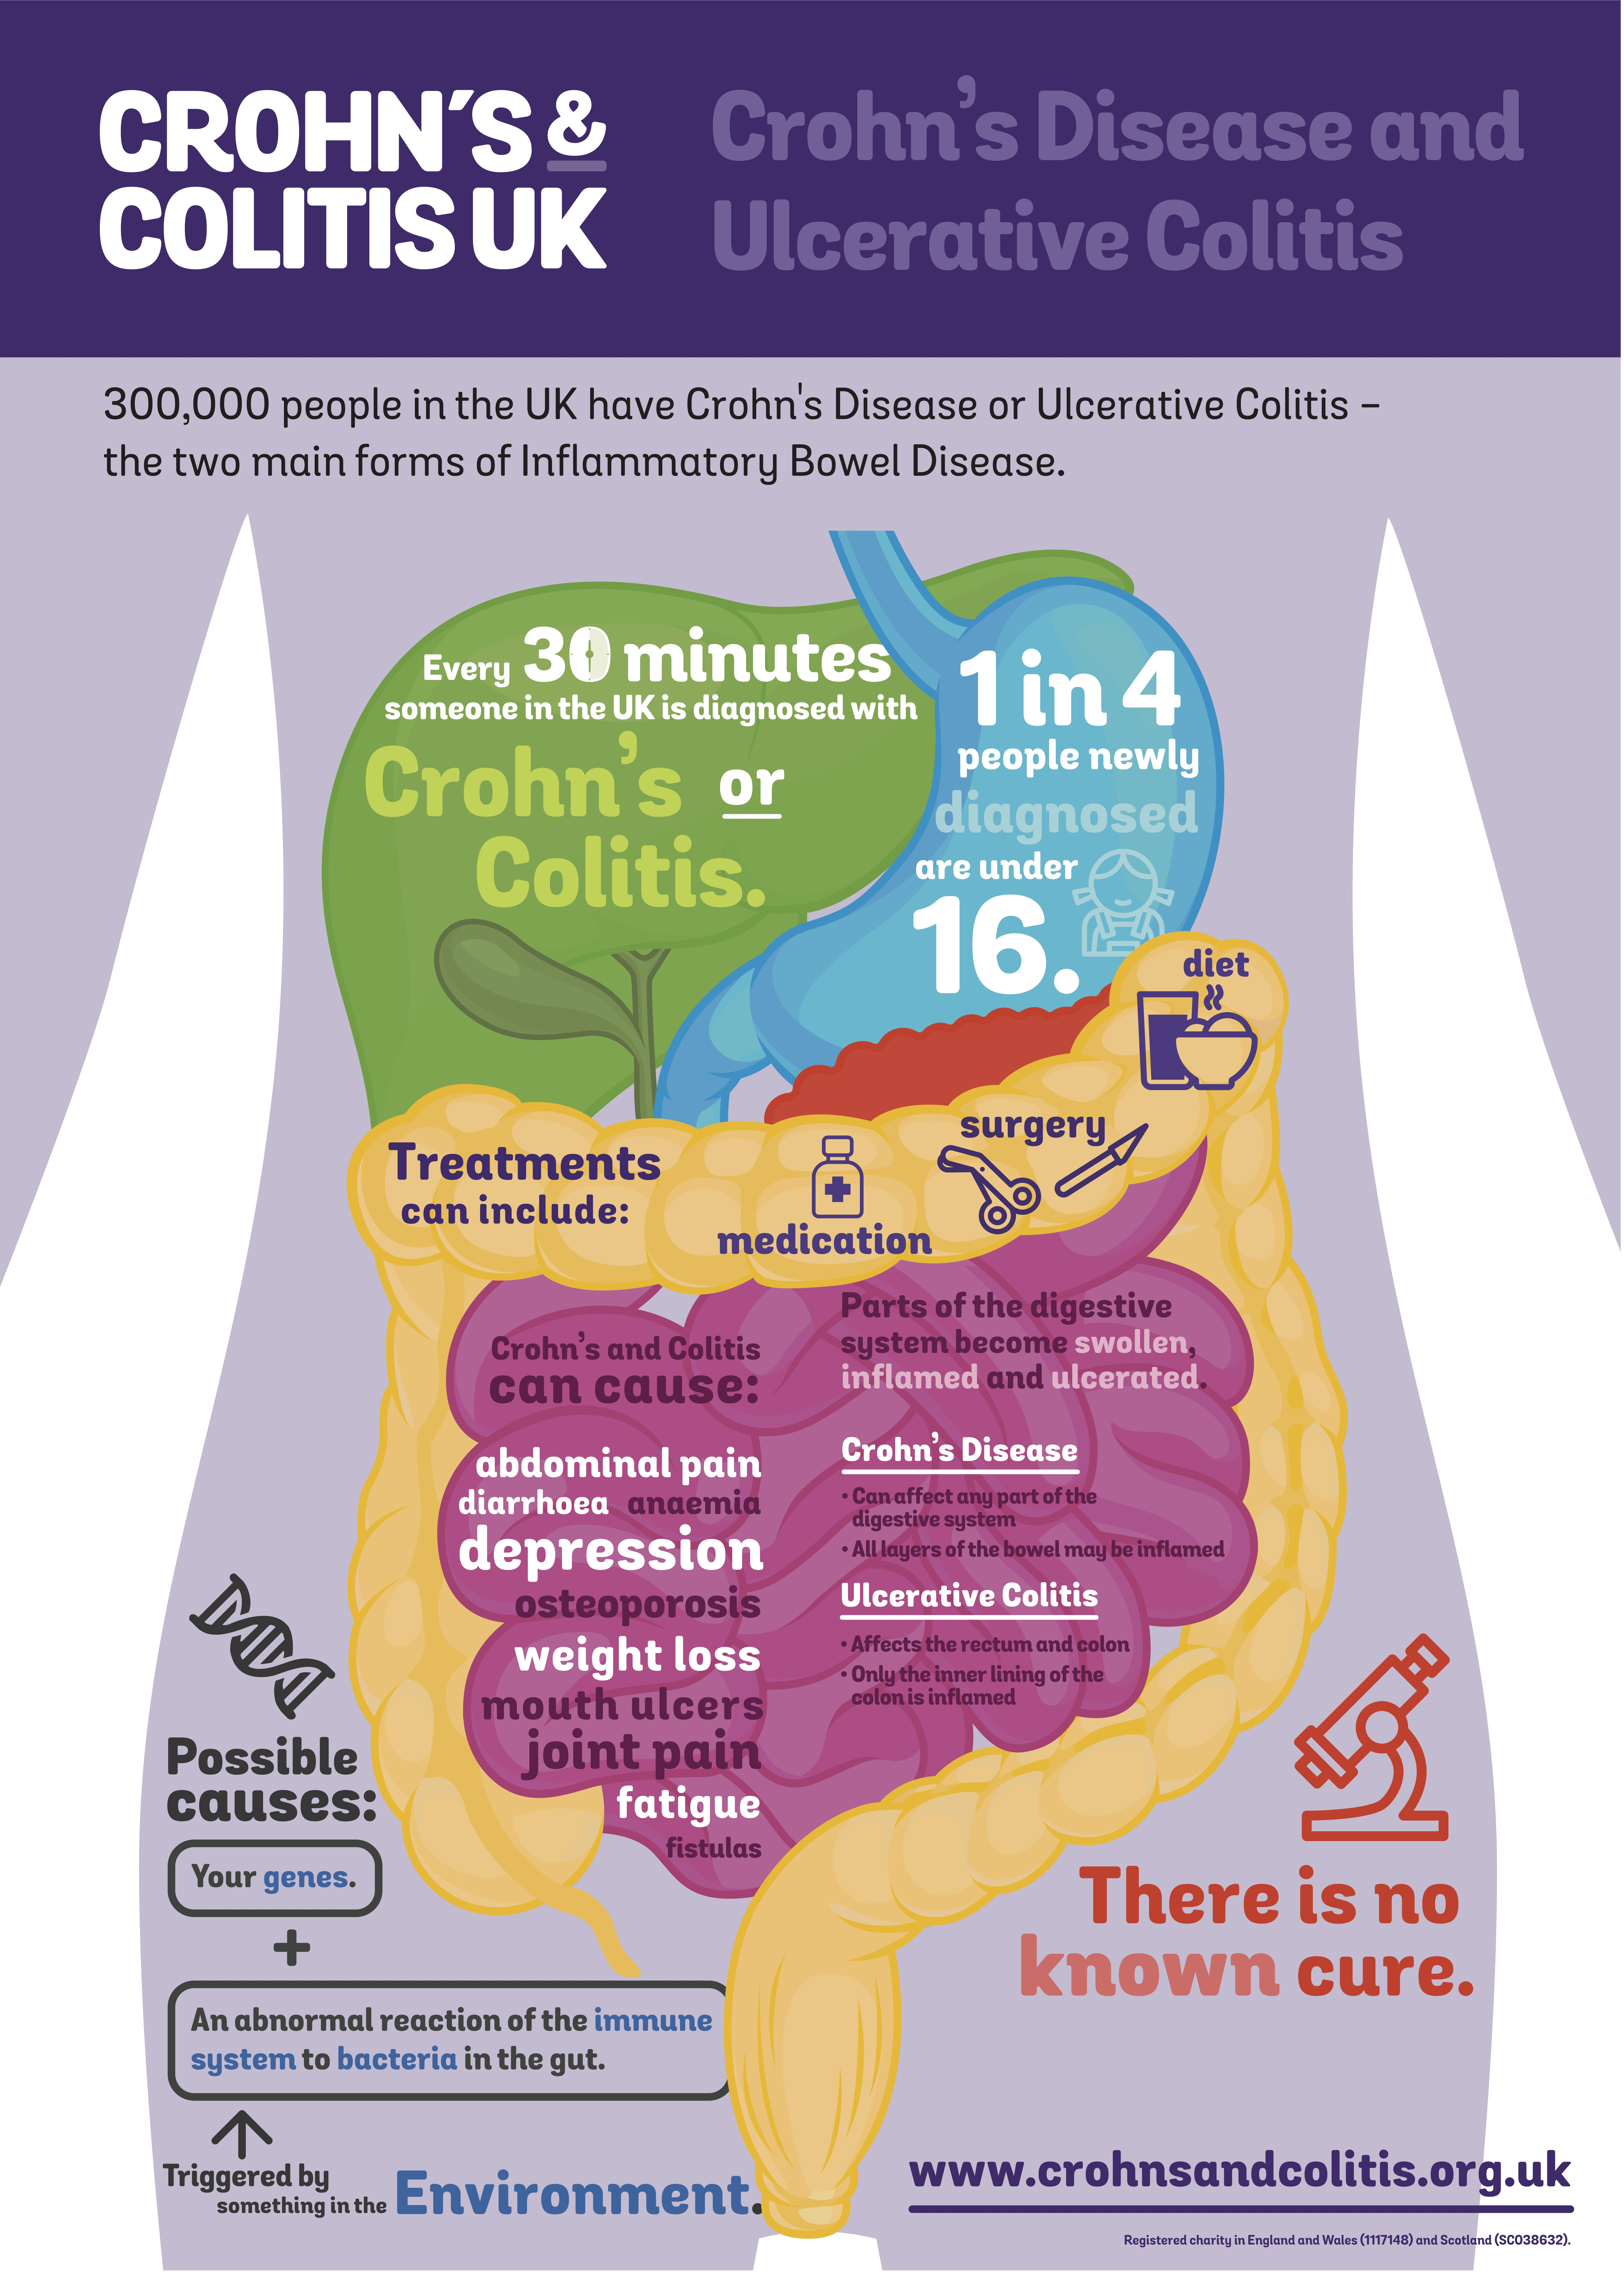 IBD Infographic